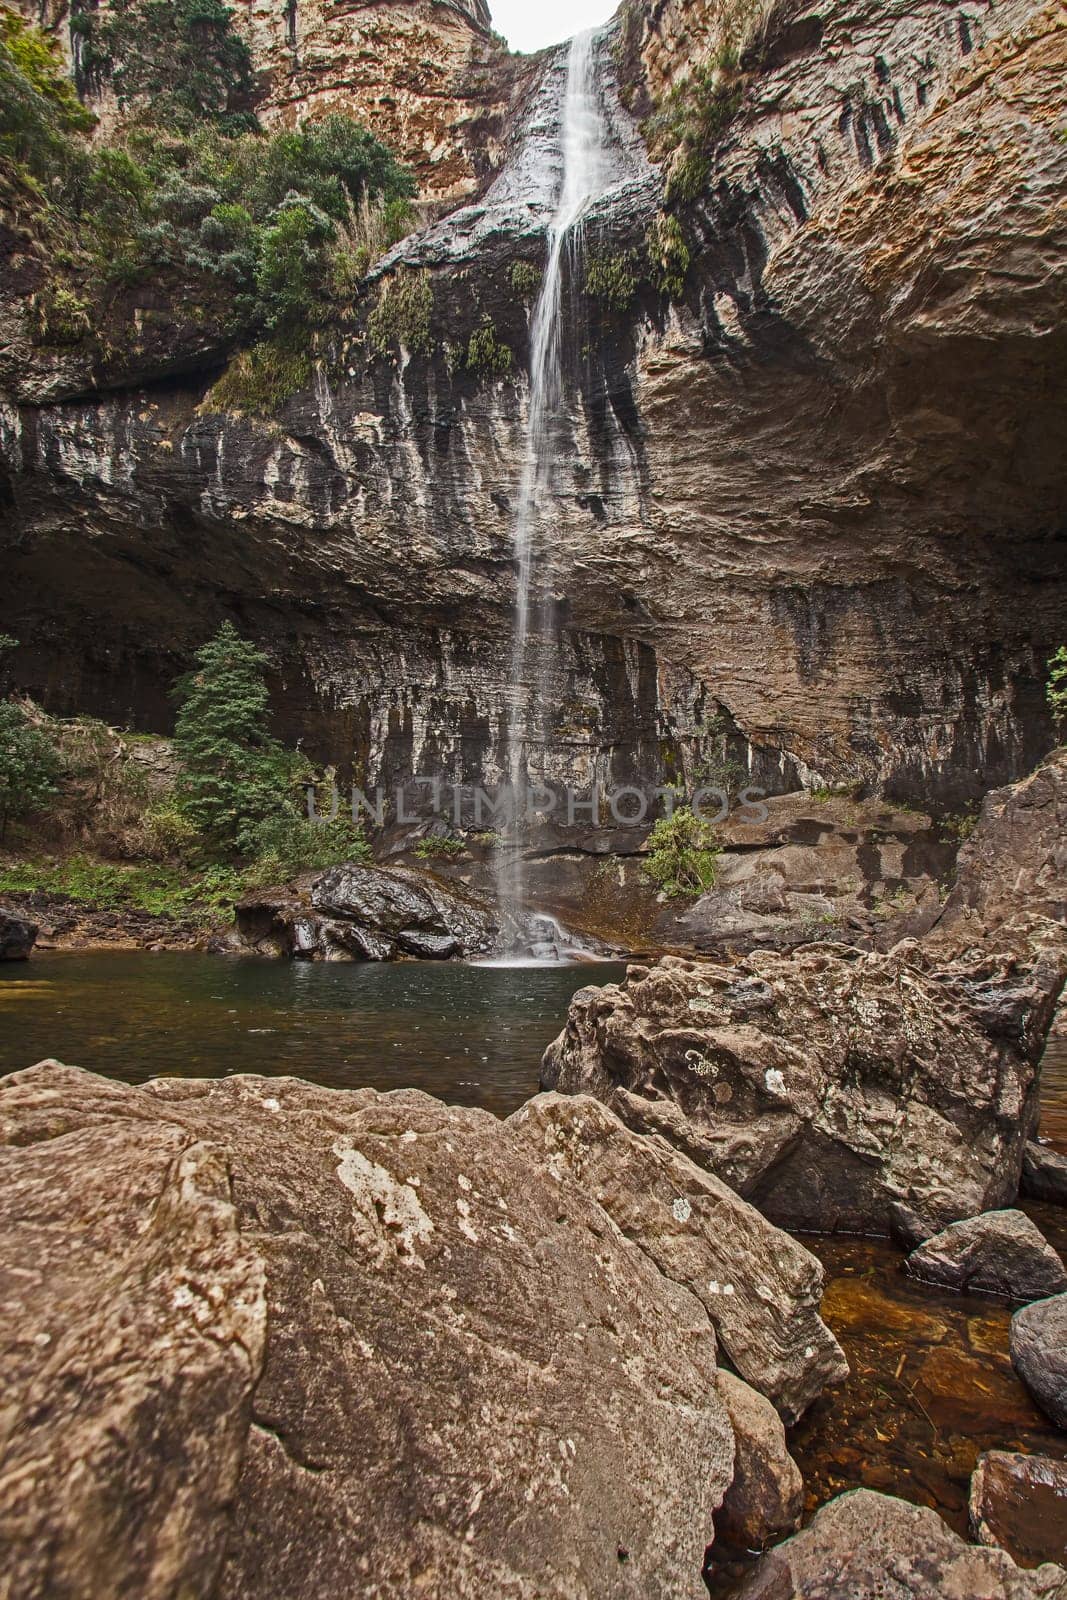 Gudu Falls 15627 by kobus_peche